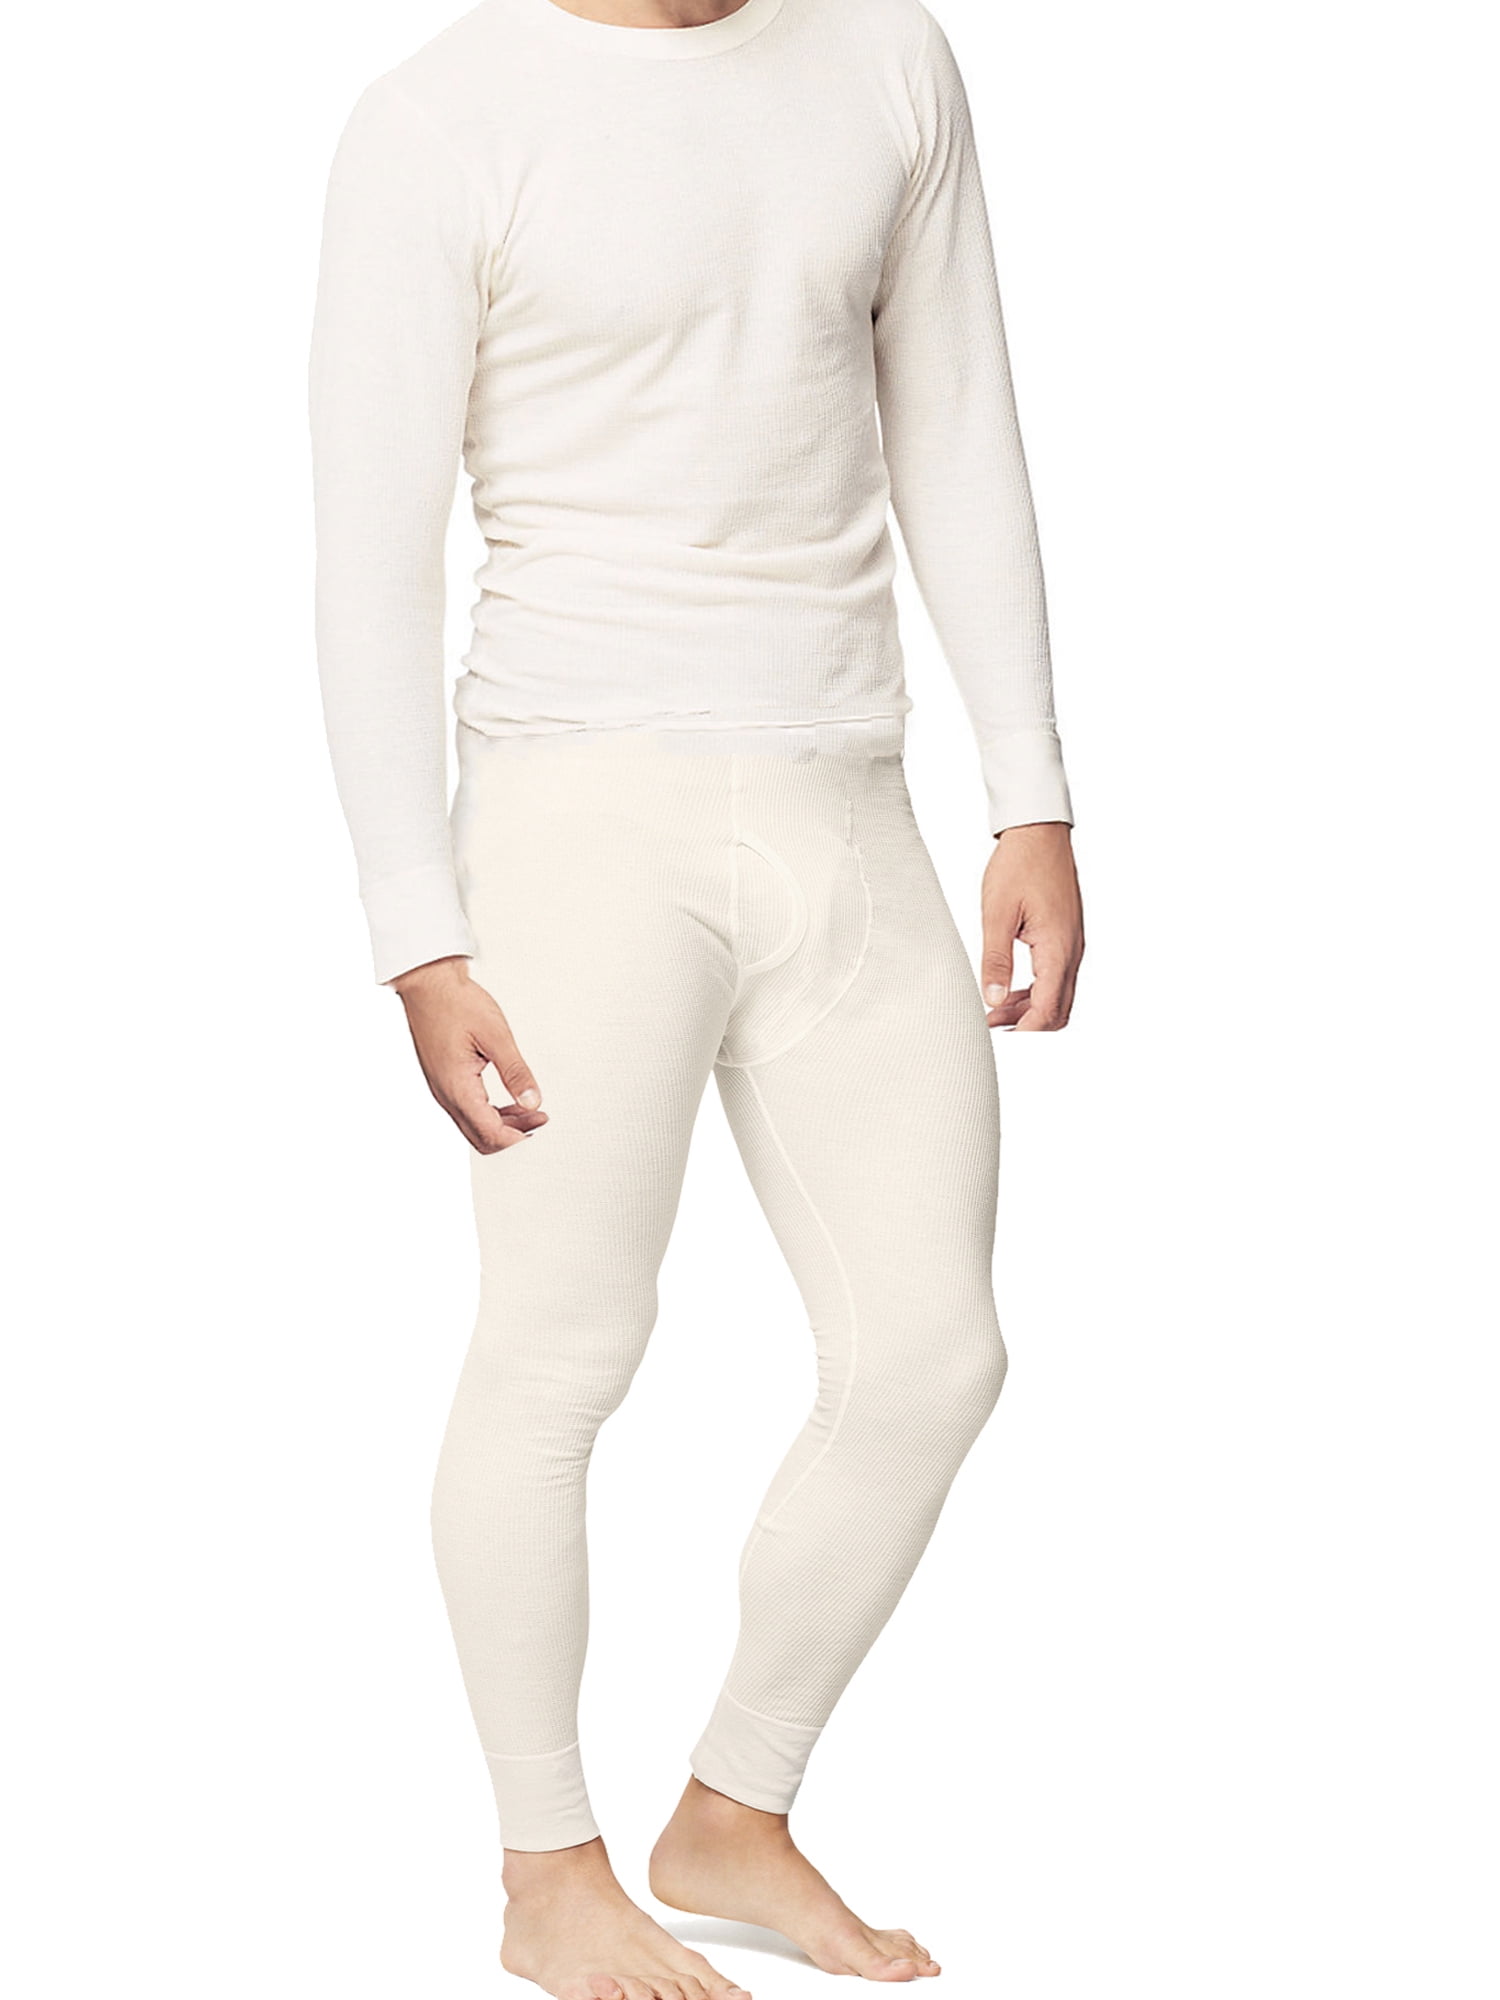 80% Silk 20% Cotton Men's Base Layer Long Johns Warm Thermal Underwear Set  SG205